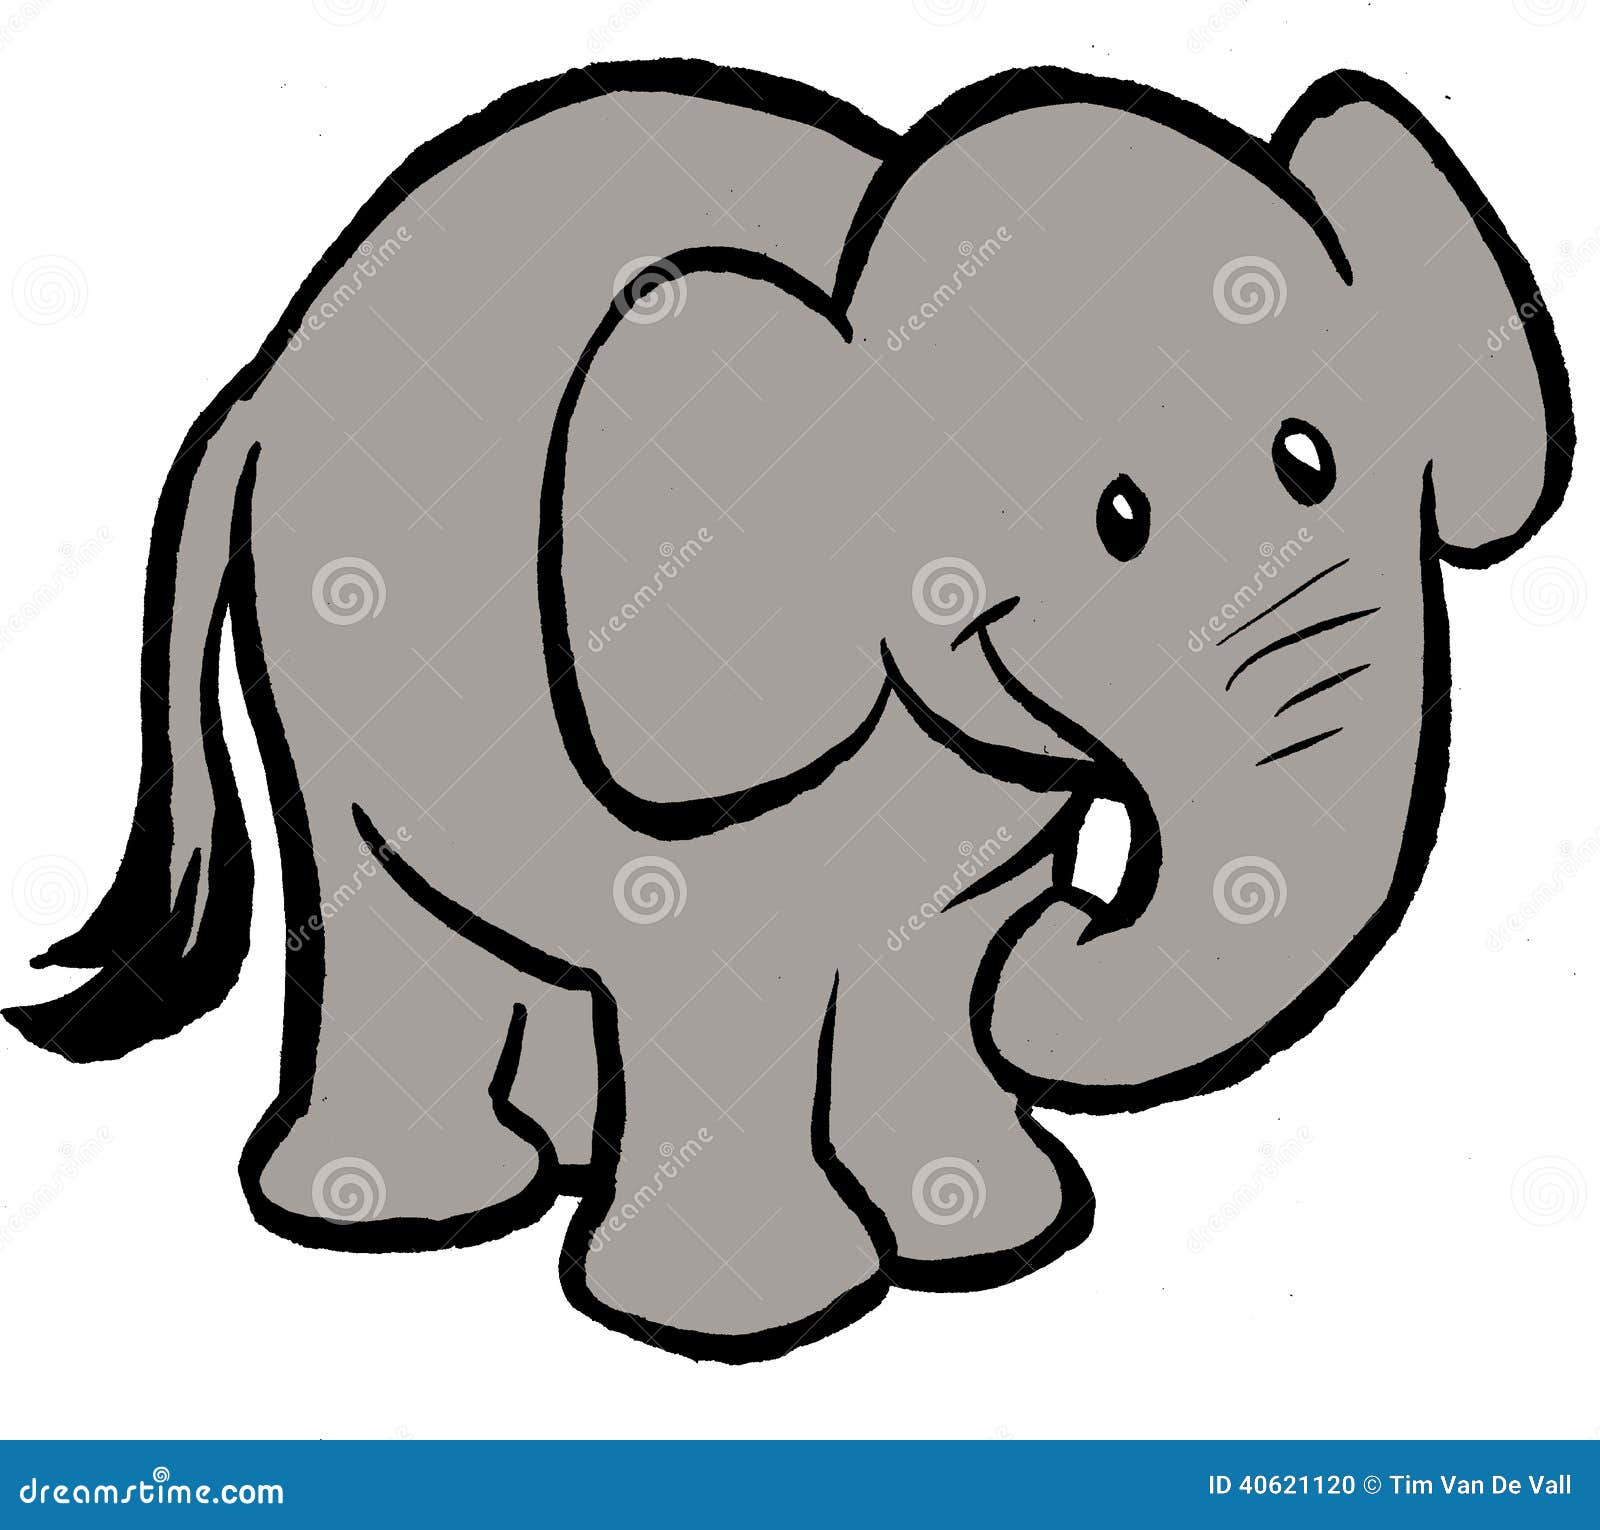 clip art cartoon elephant - photo #43